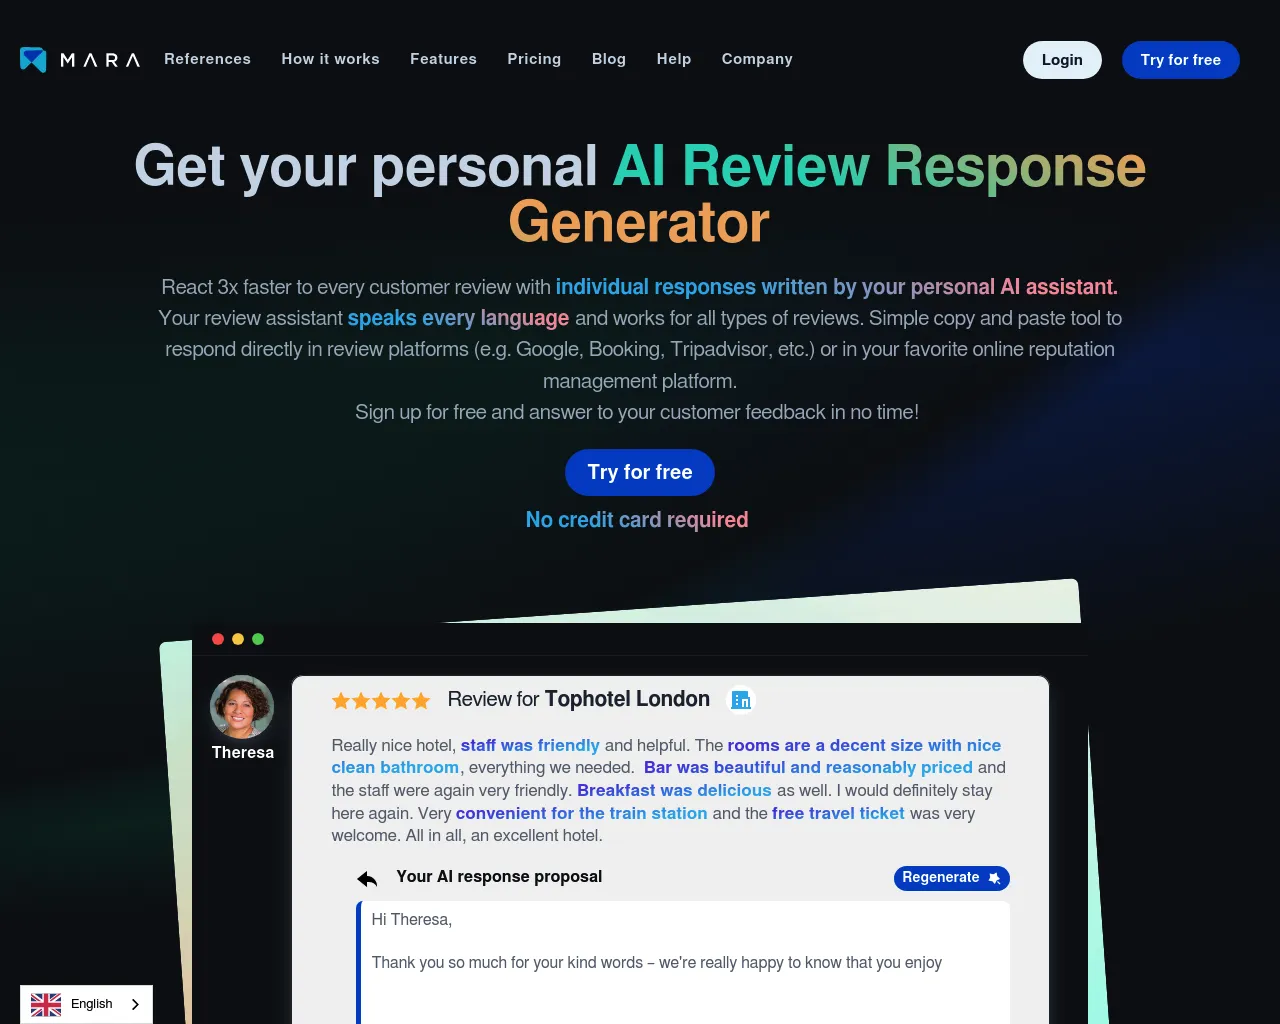 MARA AI Review Management: Respond to reviews in no time